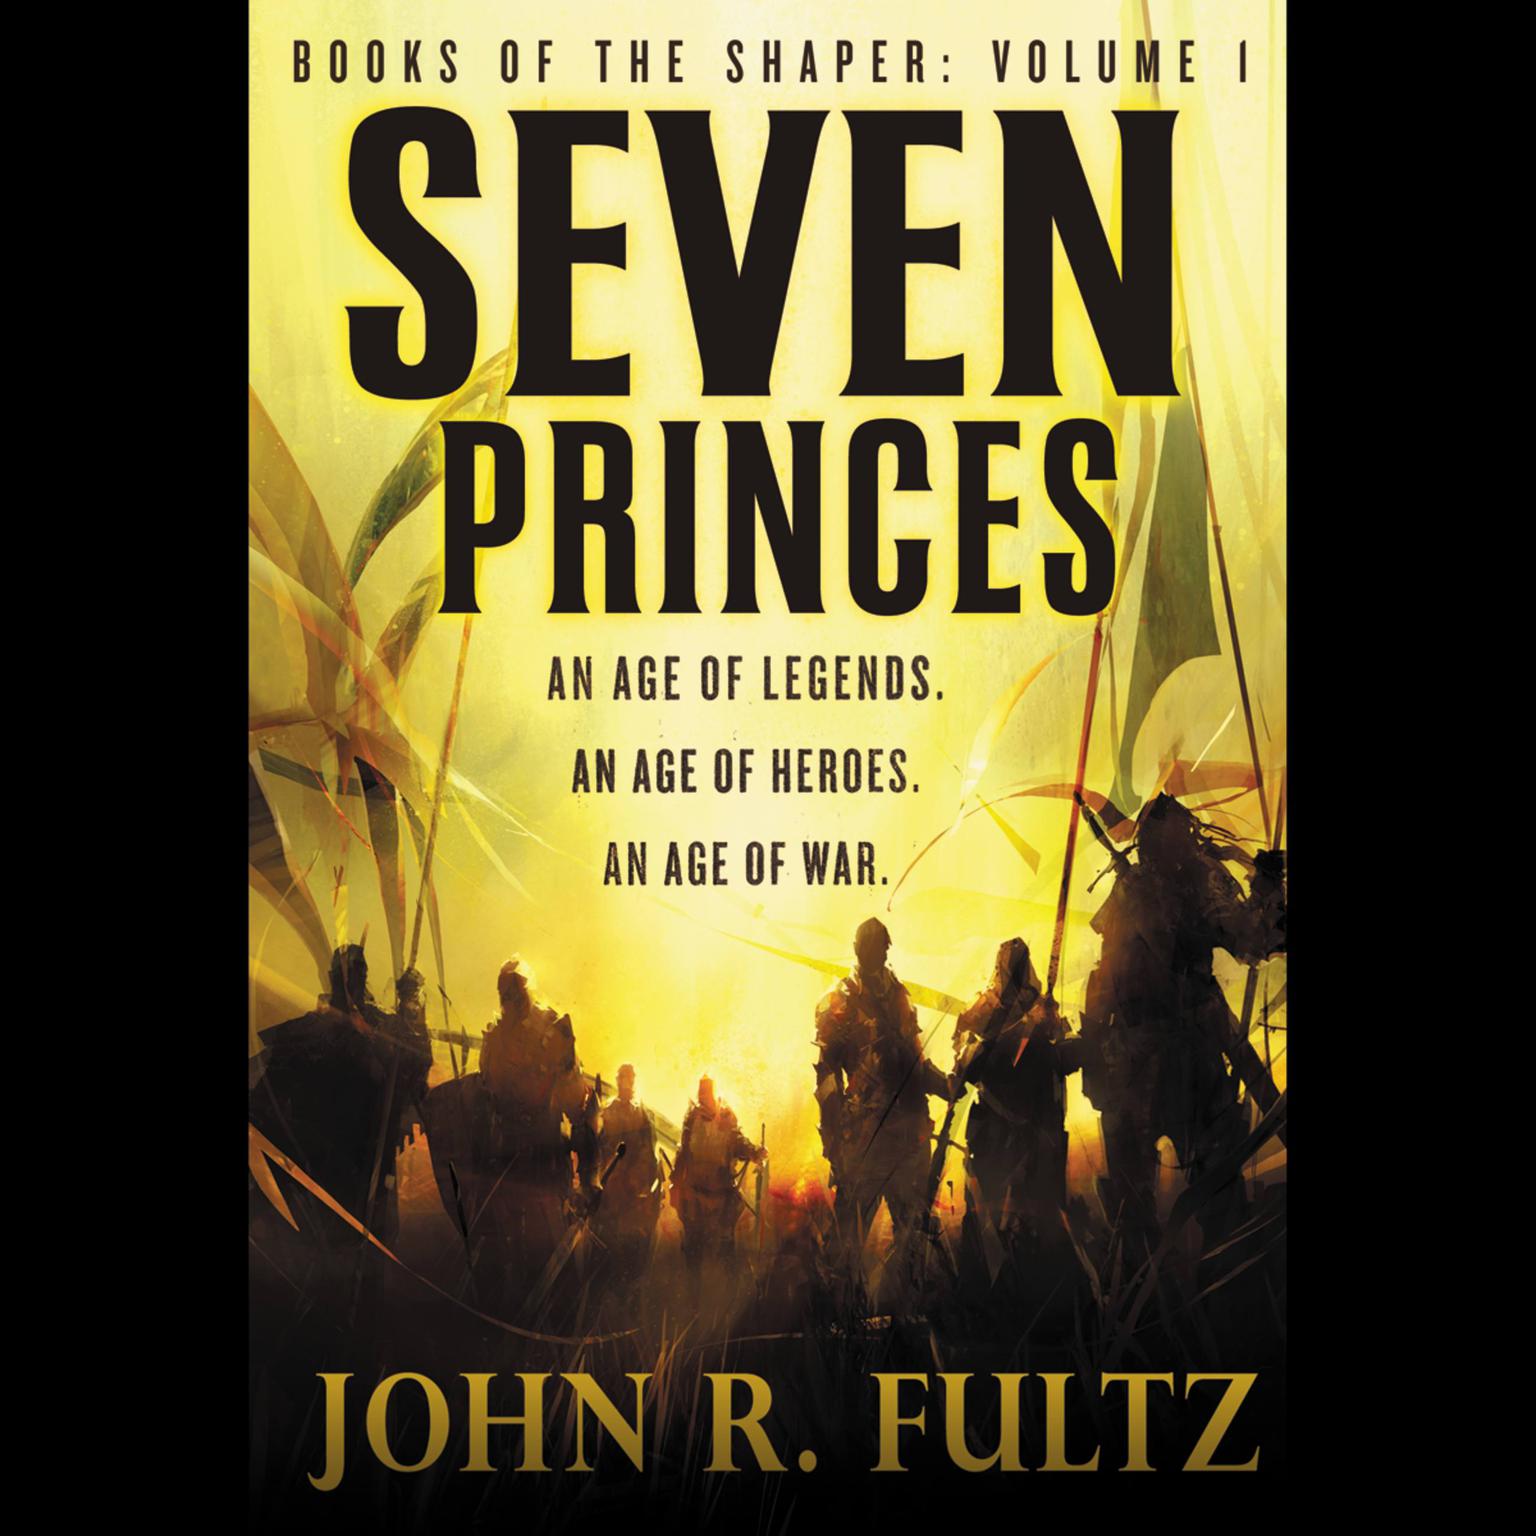 Seven Princes Audiobook, by John R. Fultz